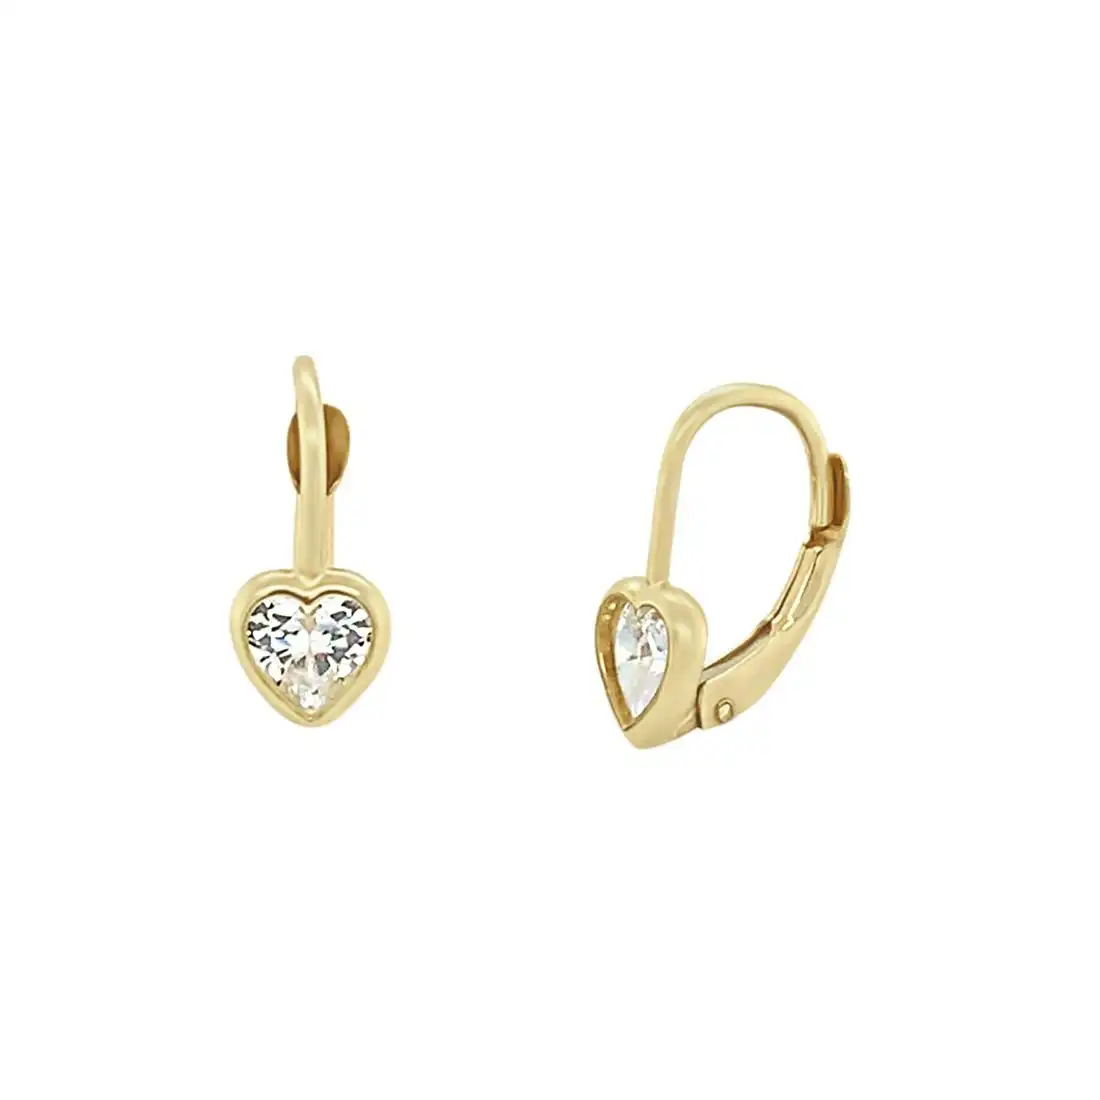 9ct Yellow Gold Heart Hoop Earrings with Cubic Zirconia